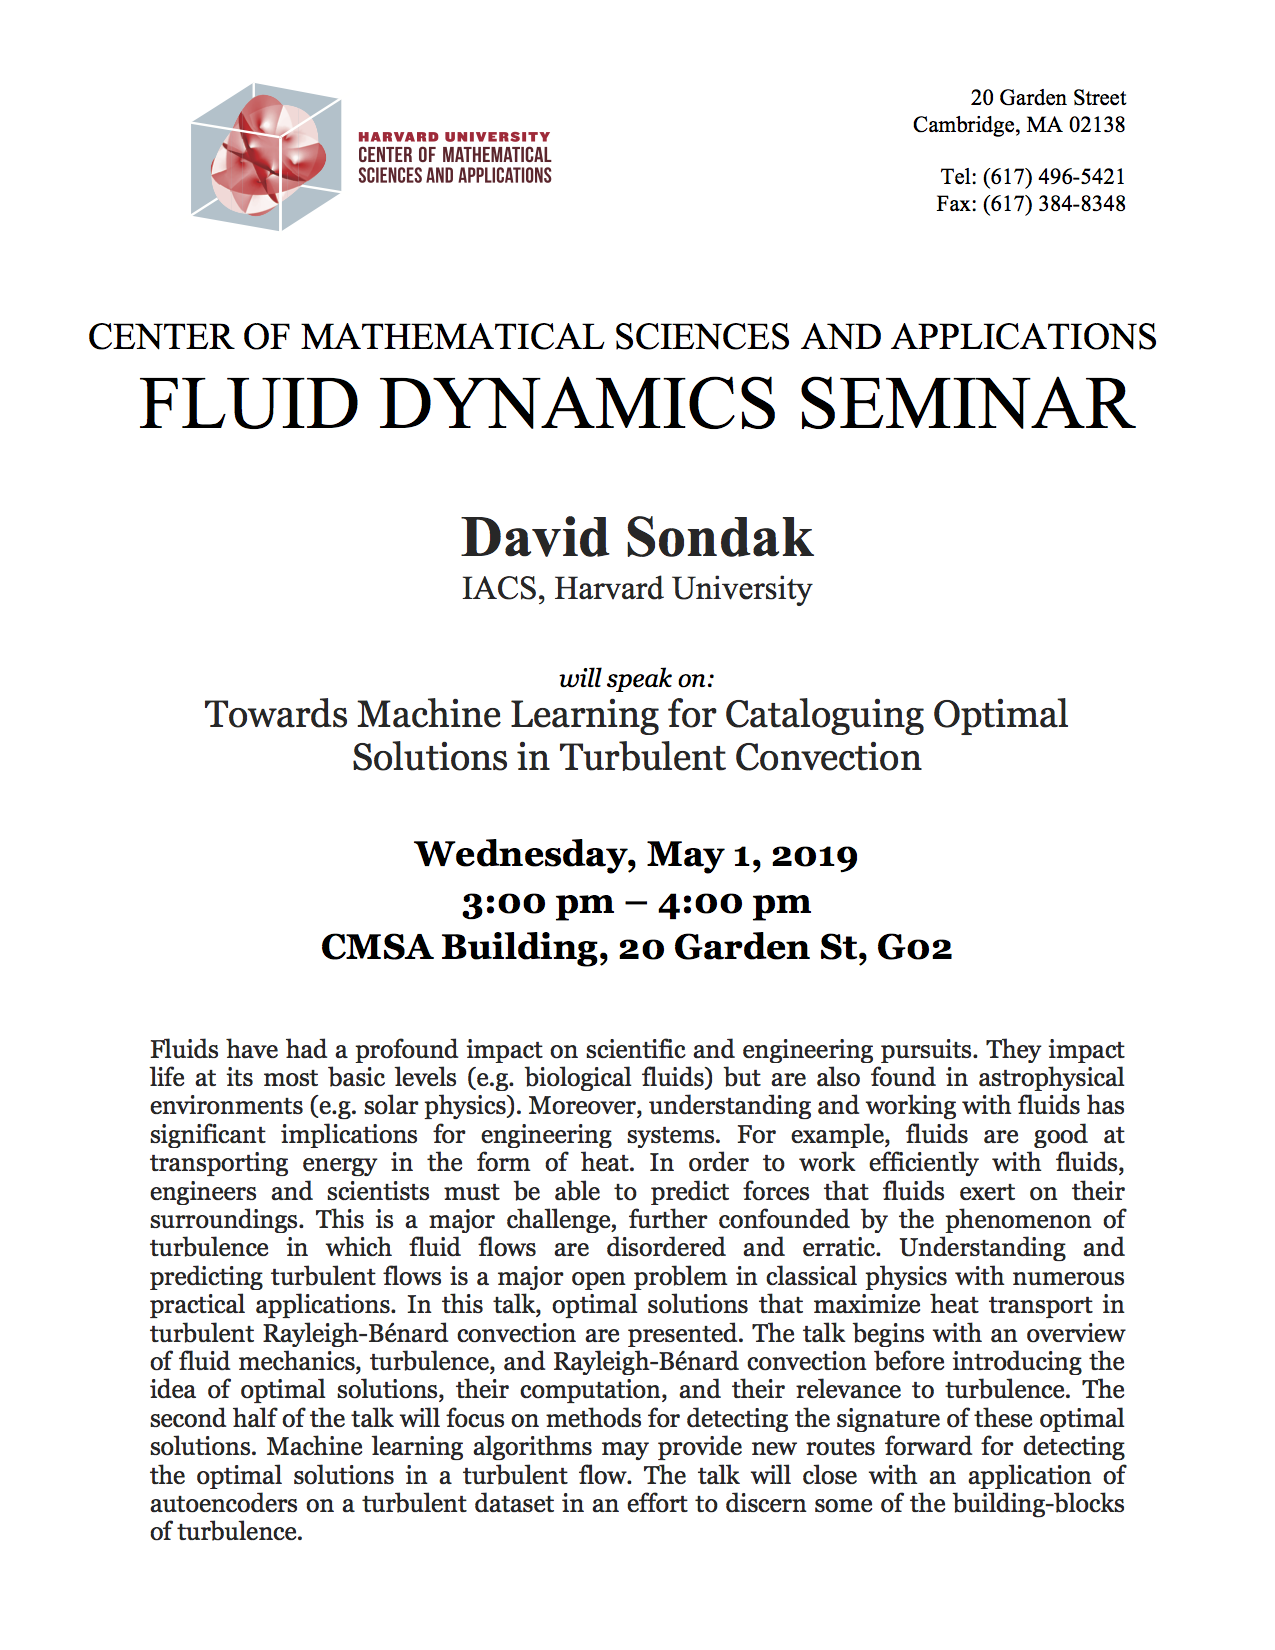 5/1/2019 Fluid Dynamics Seminar